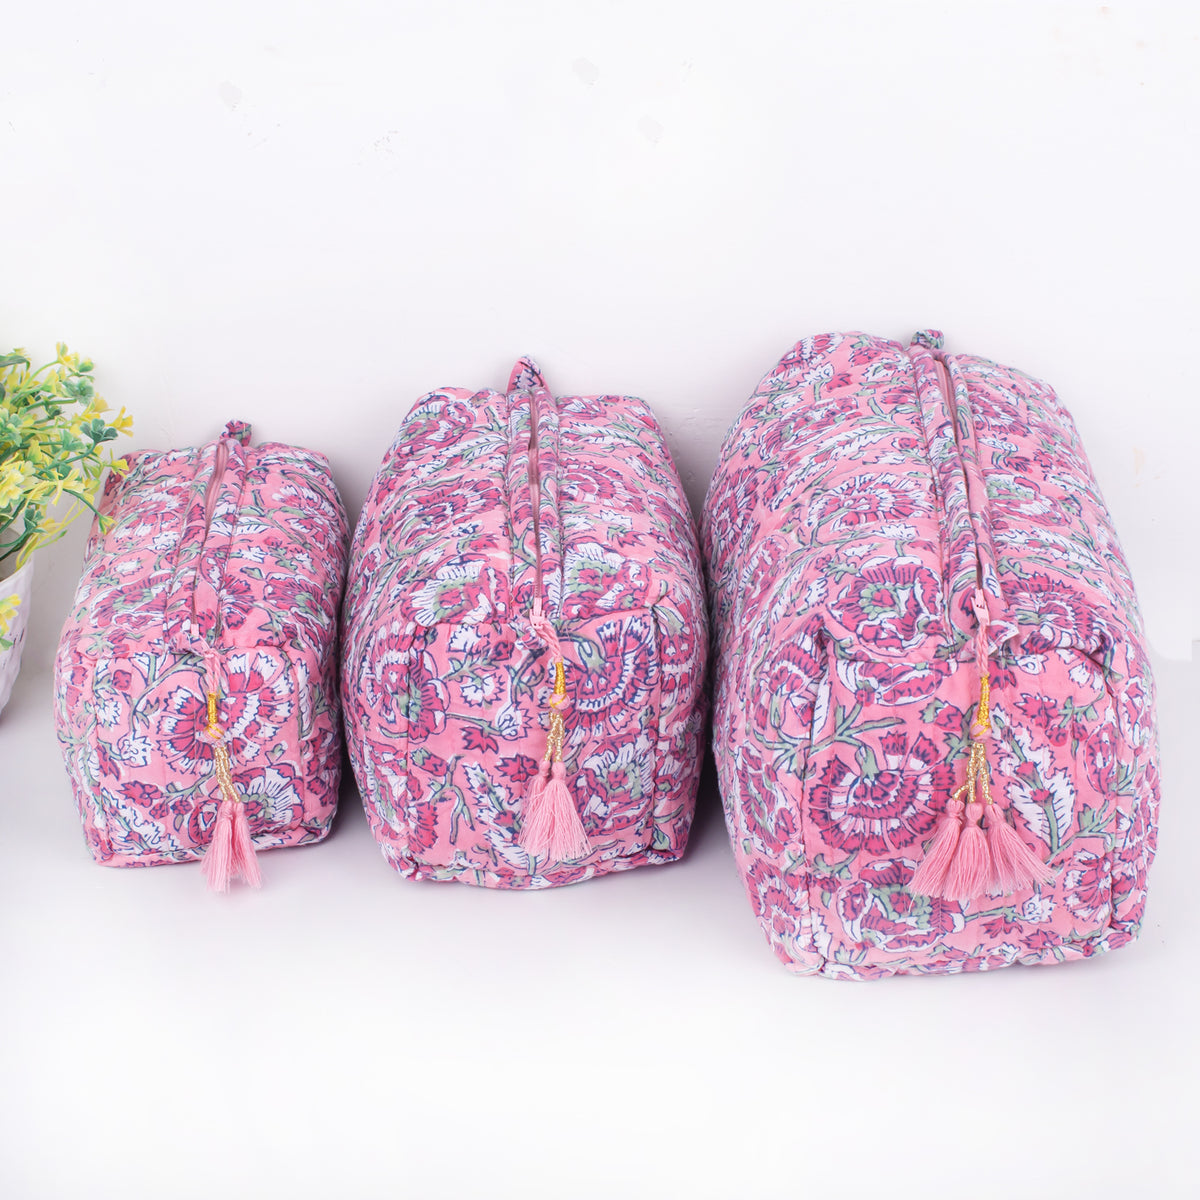 Cosmetic Bag, Assorted hand Block Printed Large Toiletry Bag, Waterproof Wash Bag, Makeup Bag, Travel Bag with Pockets, Jumbo Wash Bag